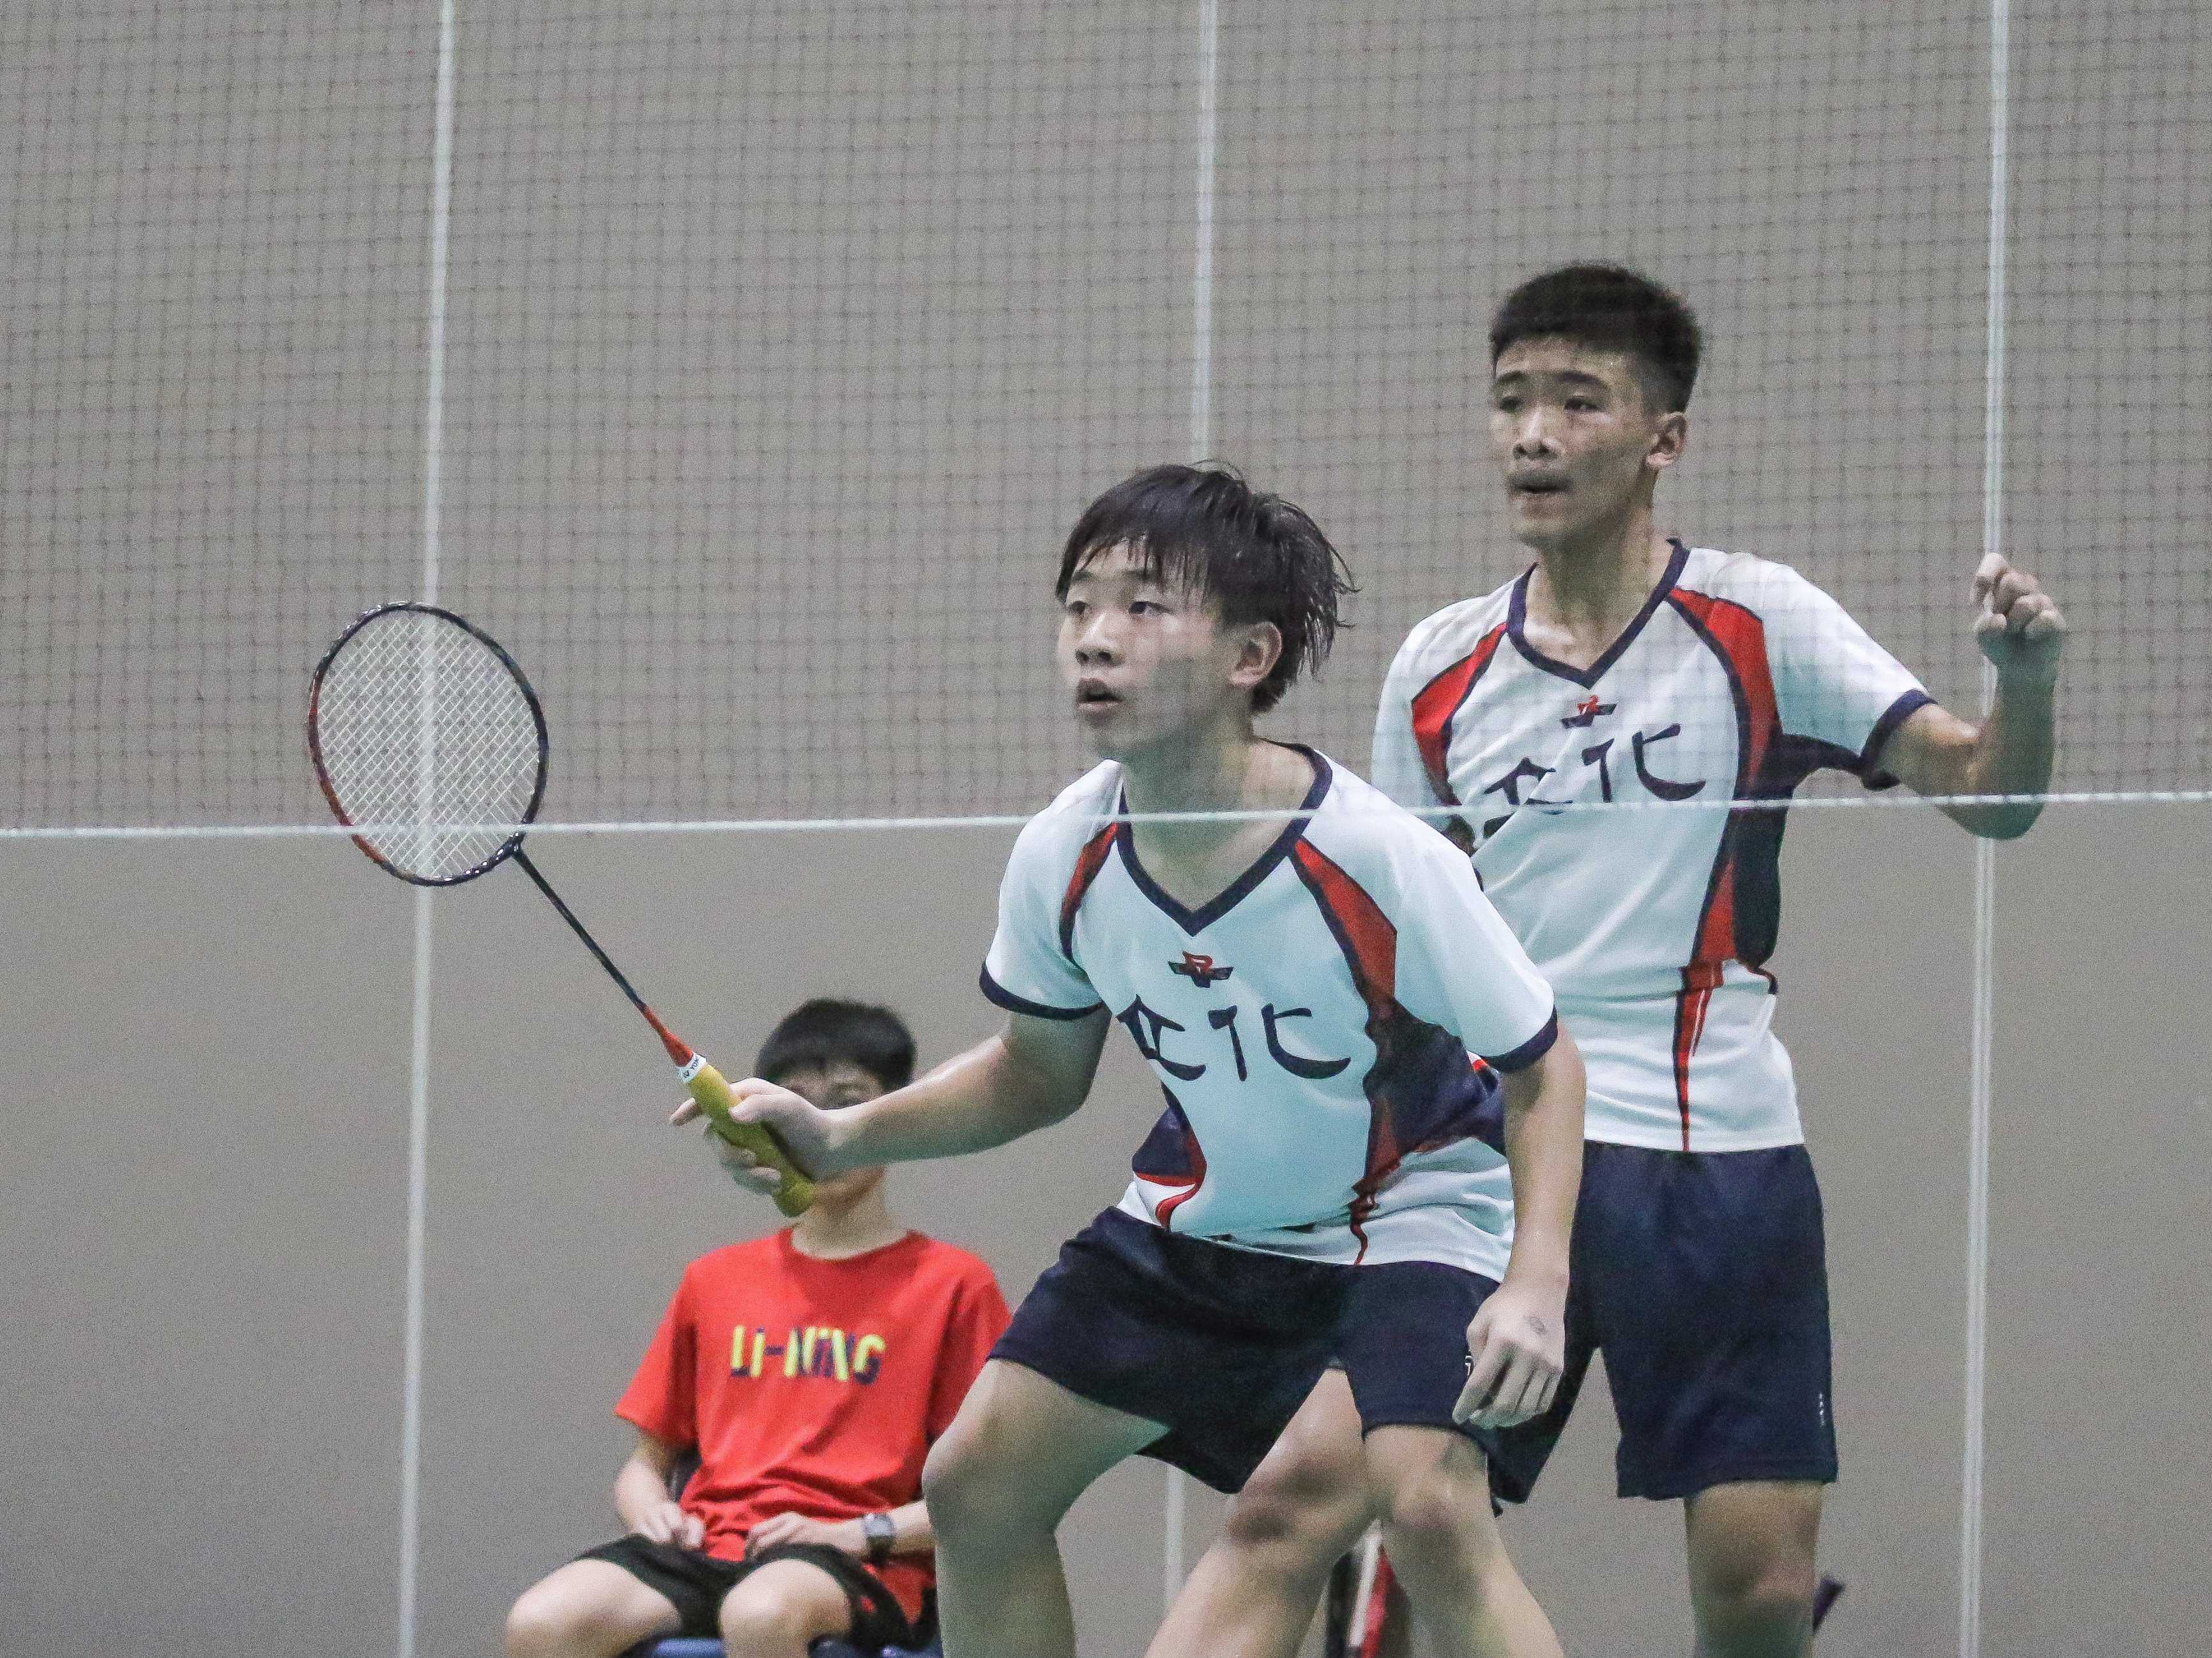 2023-05-17_Badminton_By Chin KK_IFP_1877_edited